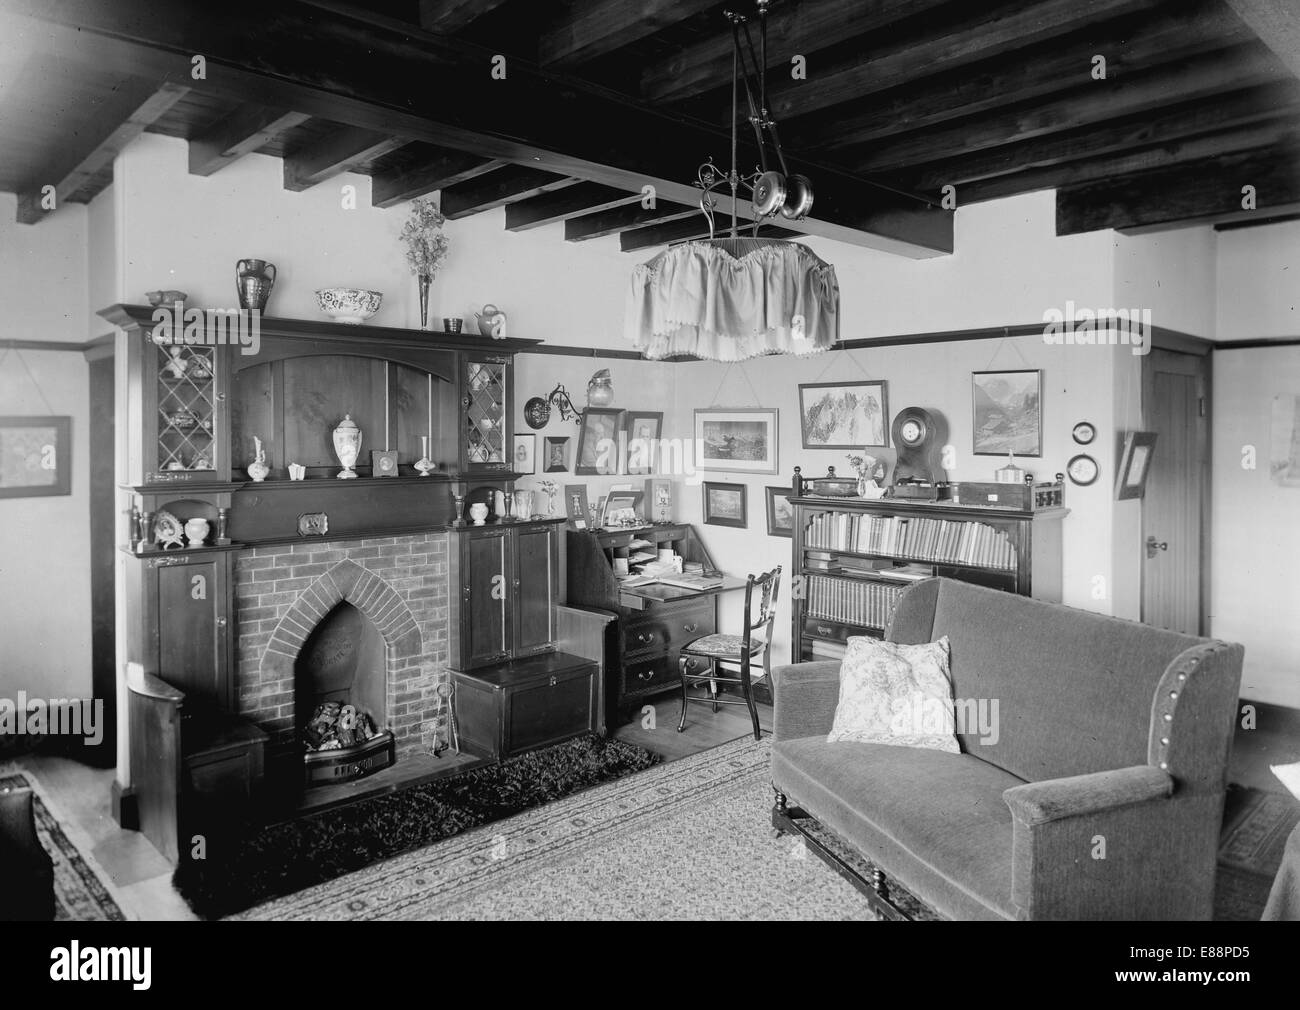 Innenraum eines Edwardian House im Jahr 1914. Foto Ilkley, Yorkshire, England. Stockfoto